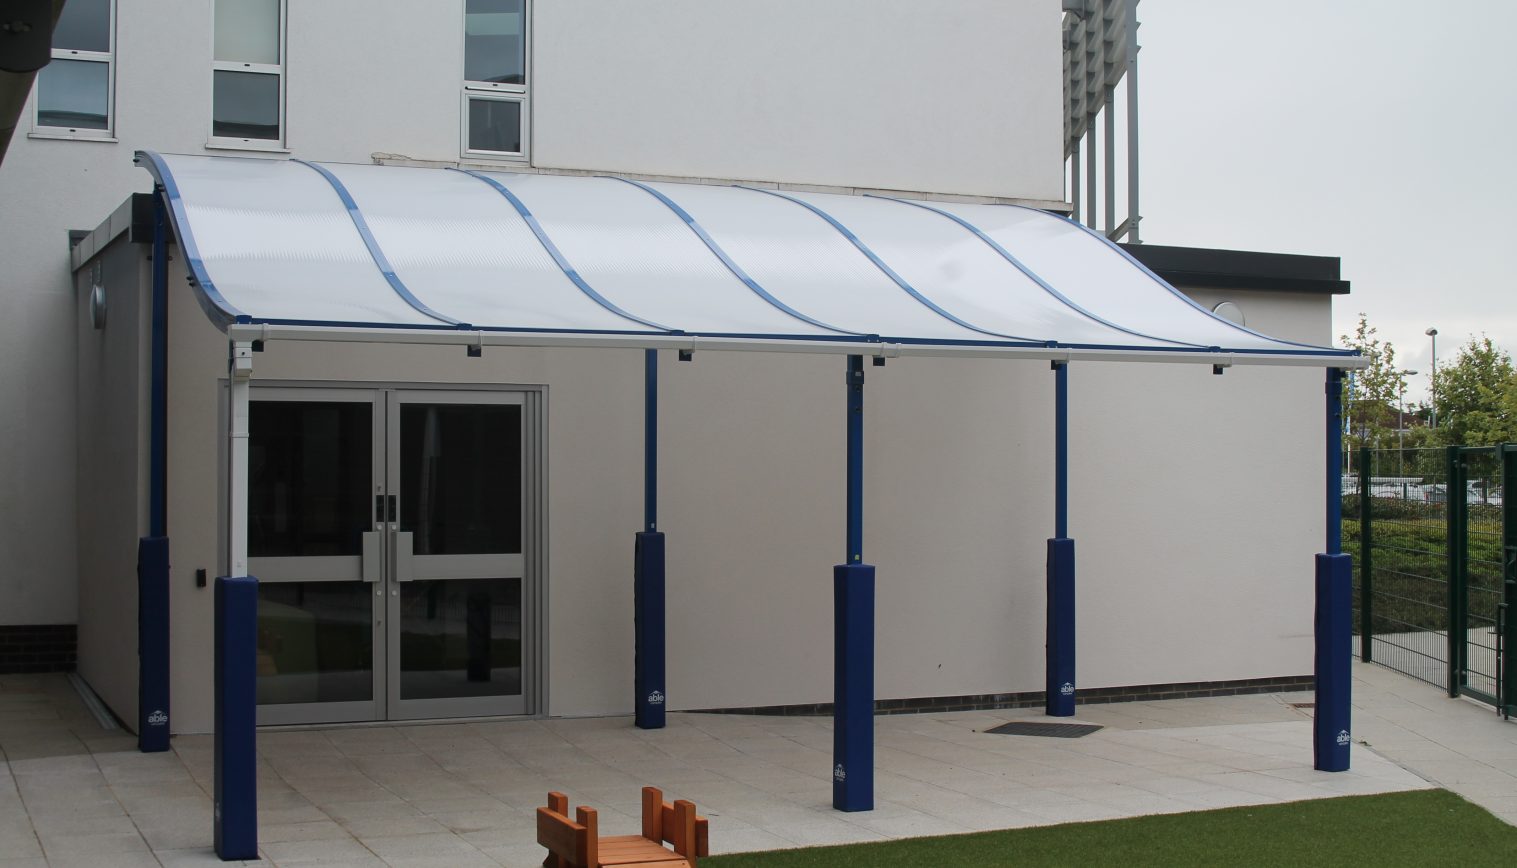 Swindon Academy – Second Installation